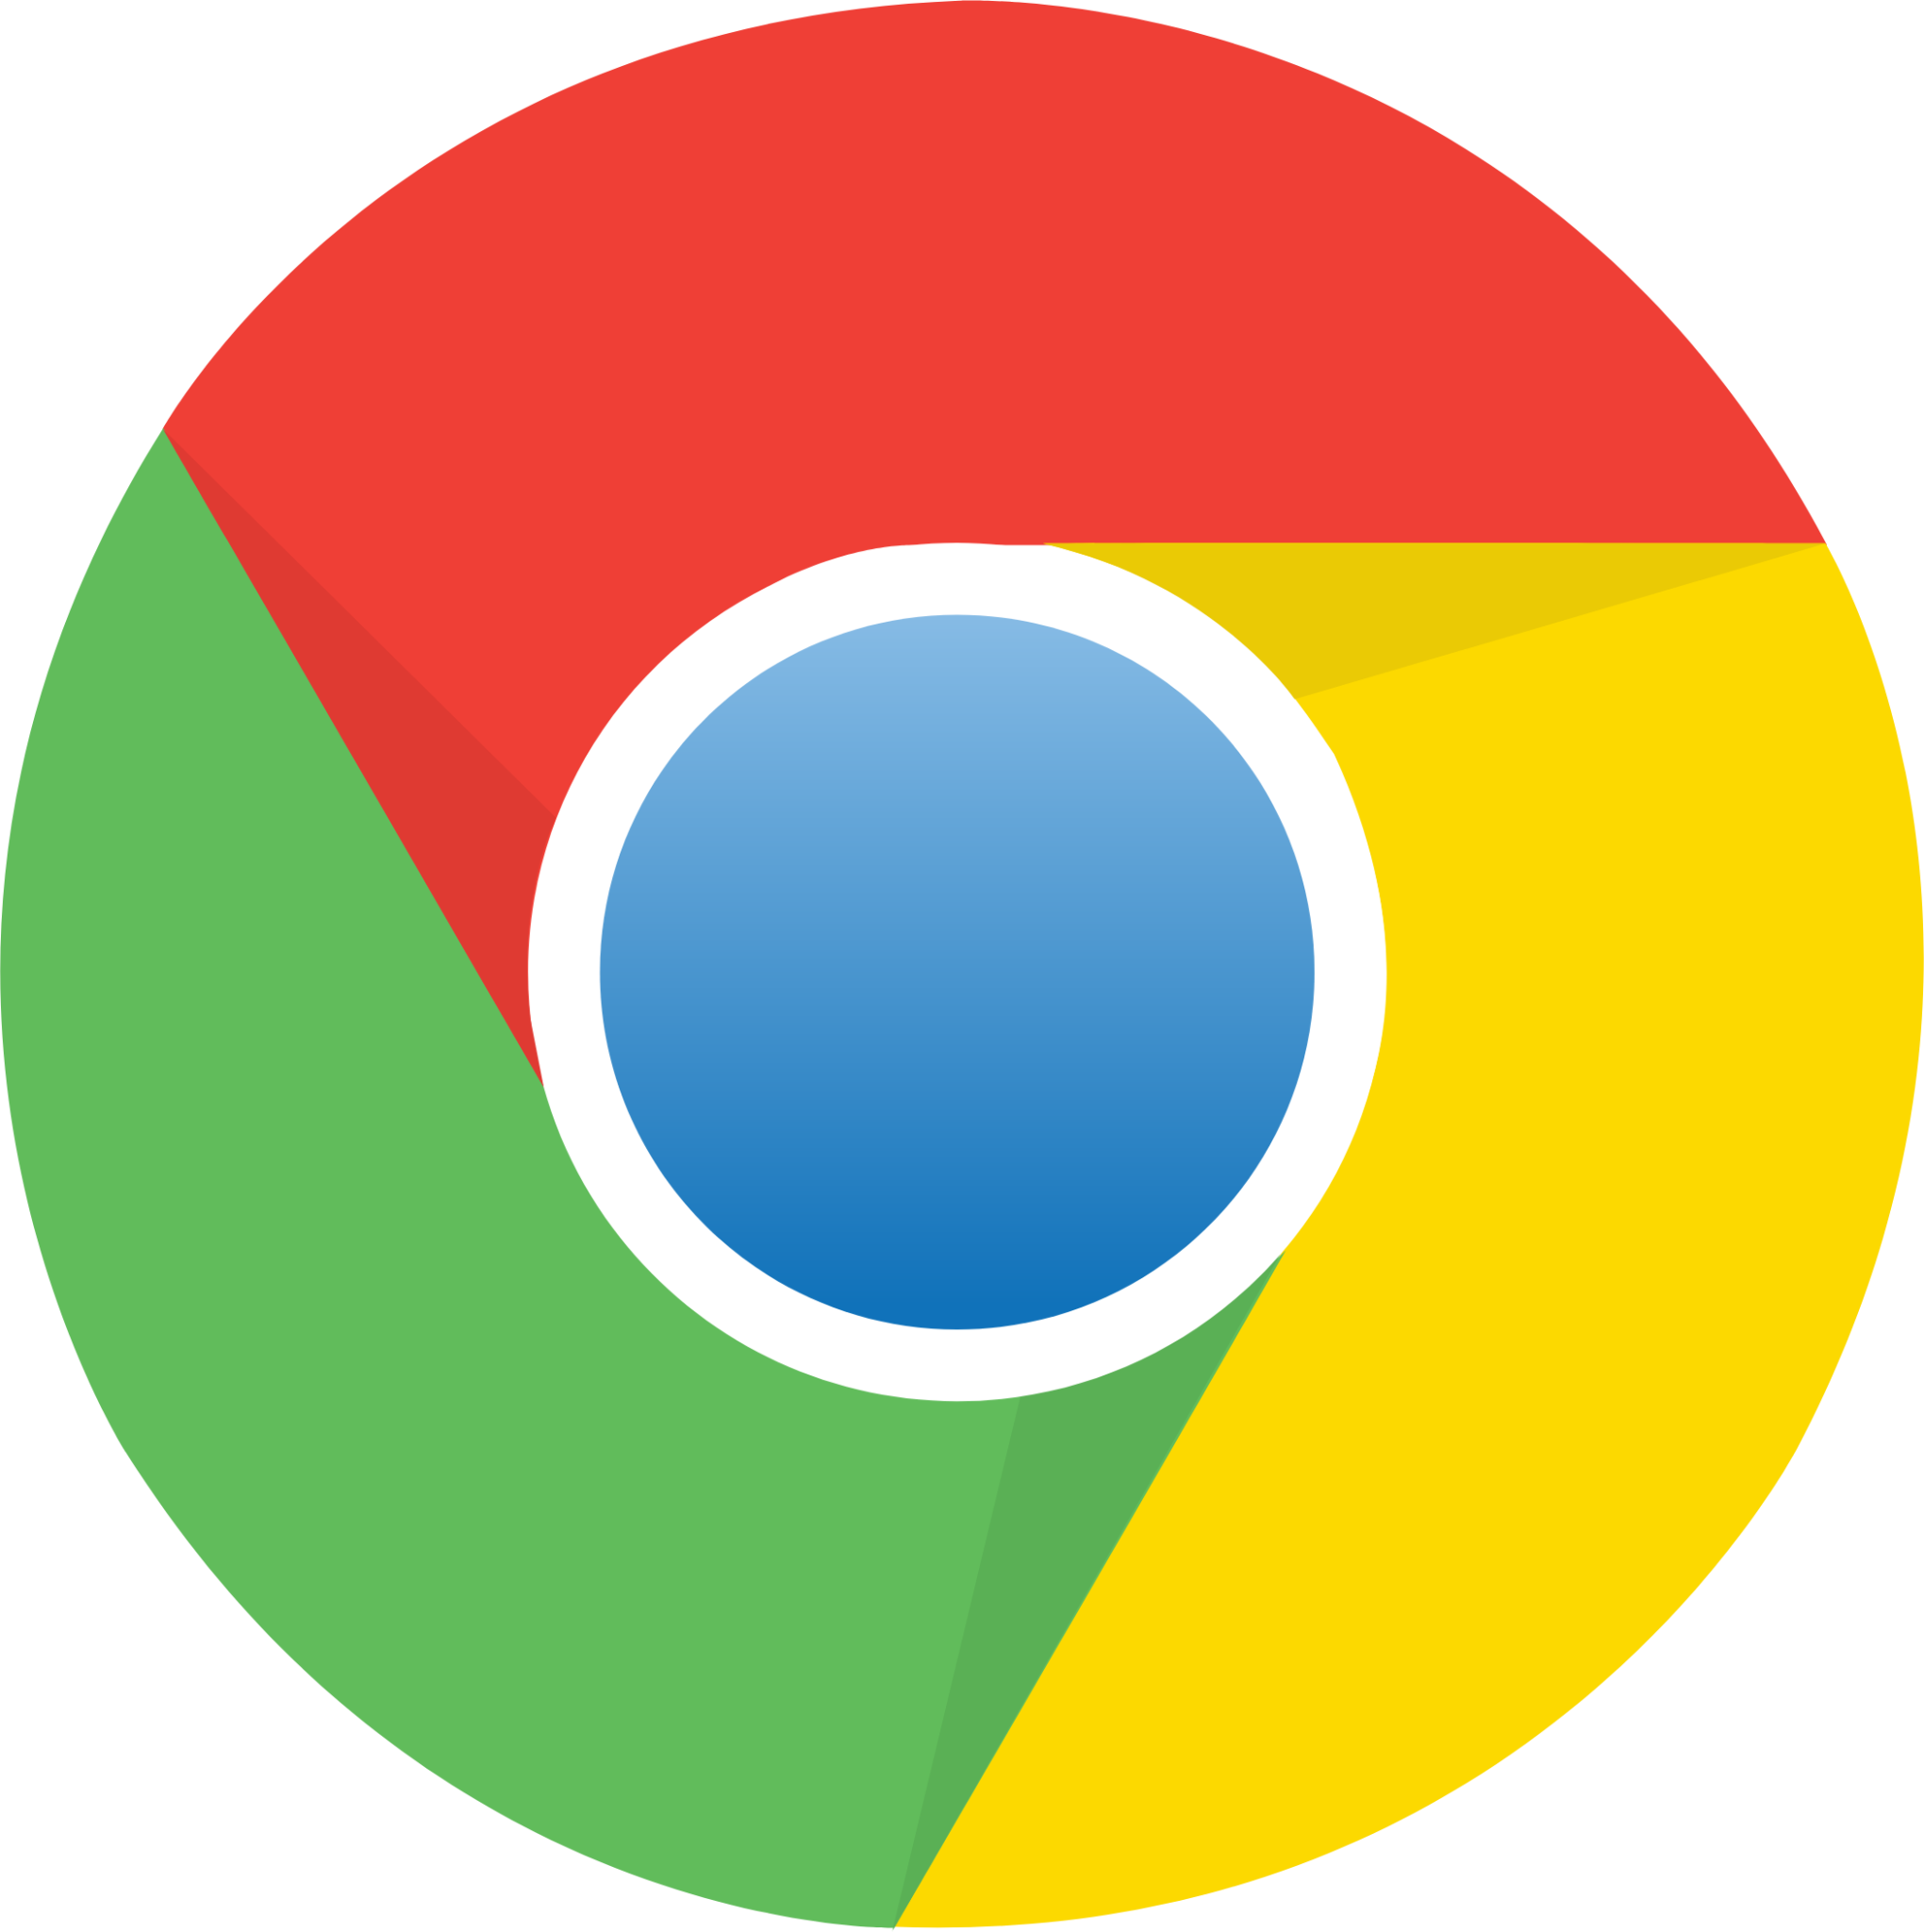 browser google chrome icon